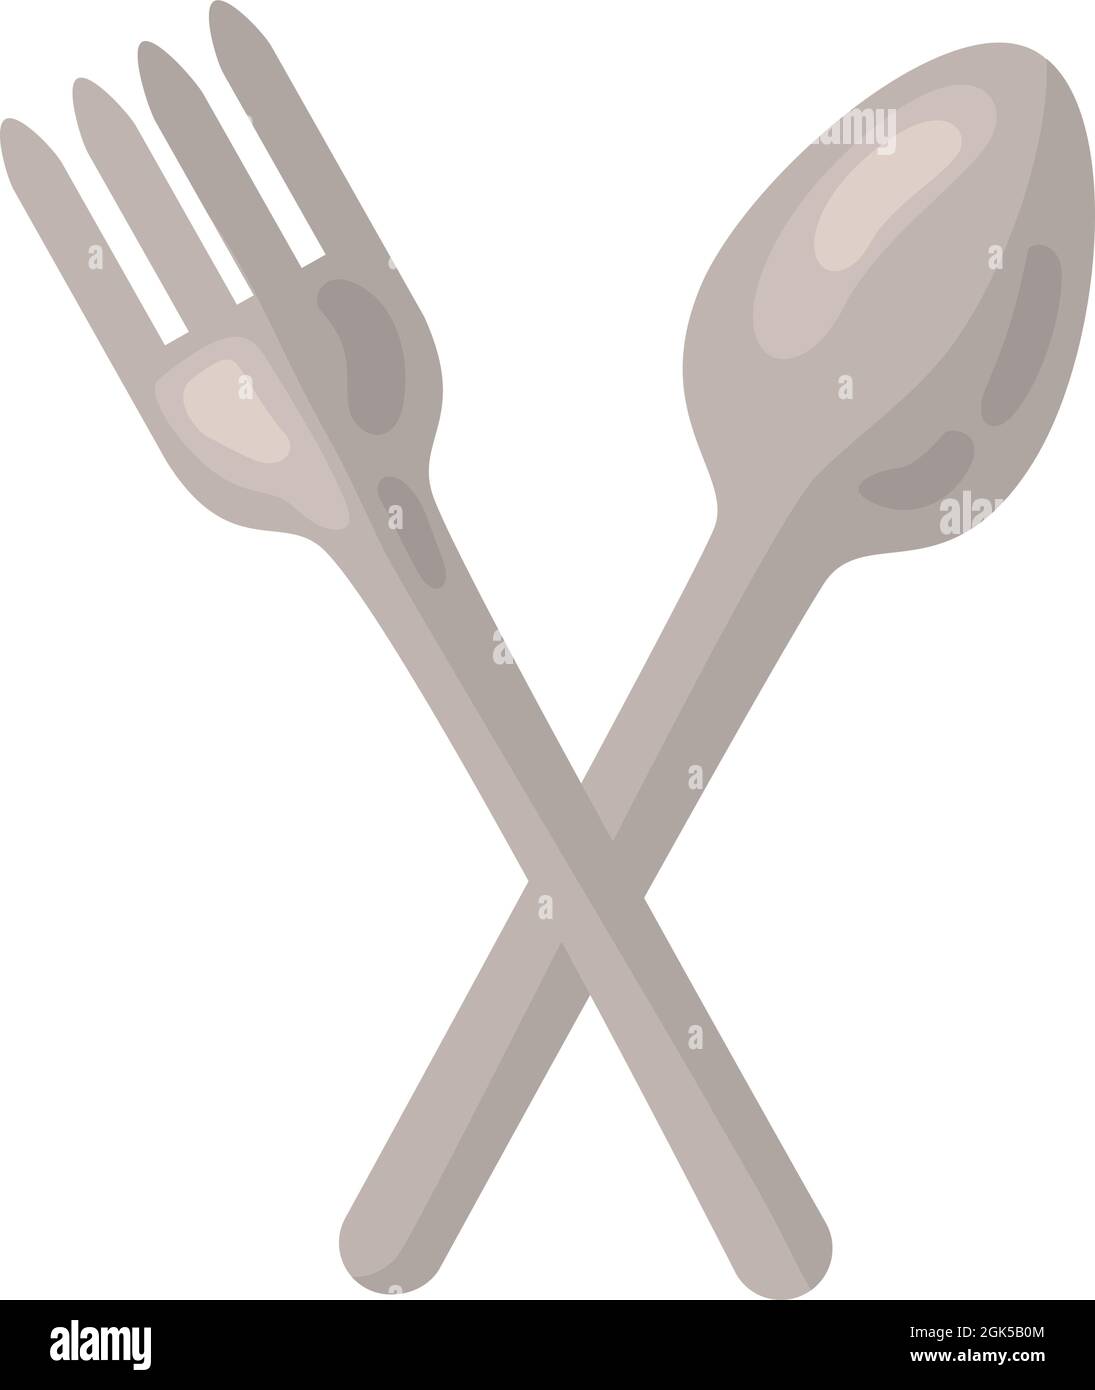 https://c8.alamy.com/comp/2GK5B0M/fork-and-spoon-cutleries-icon-2GK5B0M.jpg